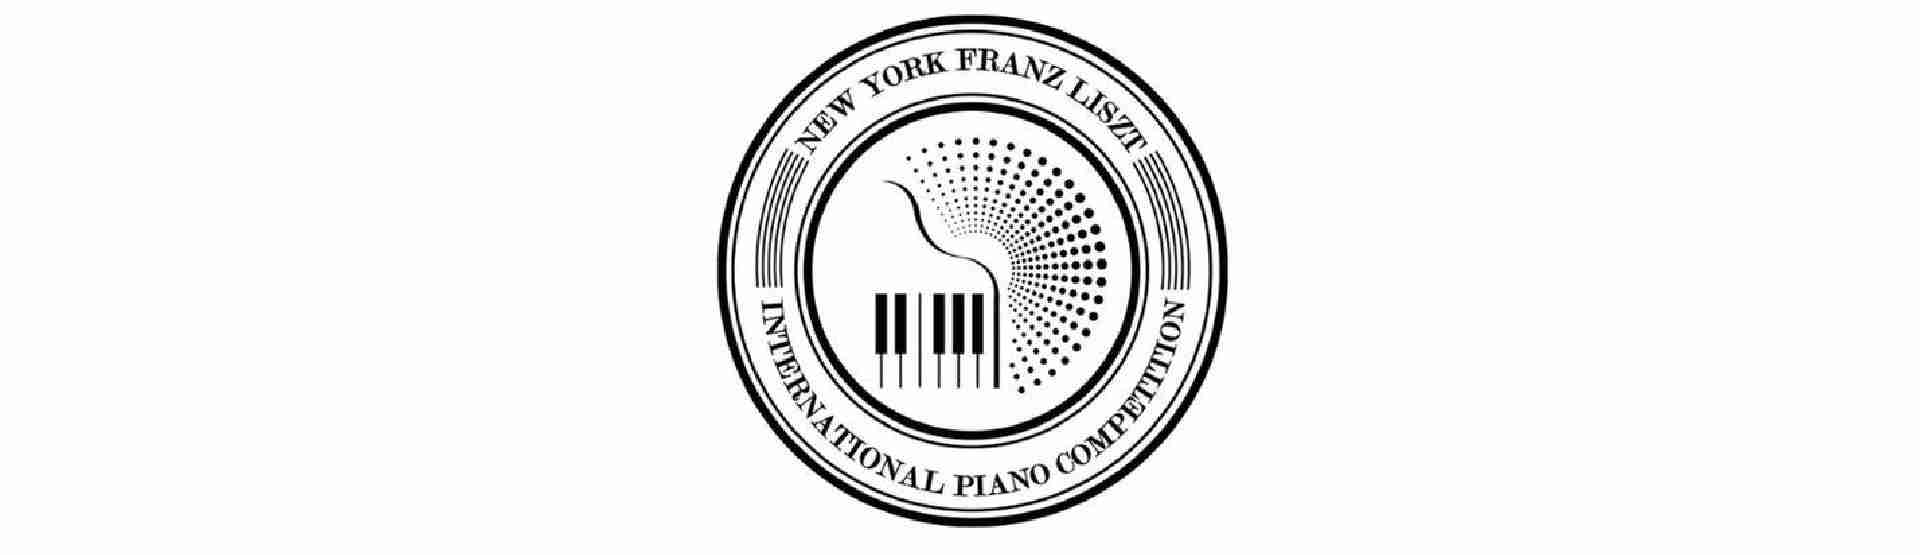 II. New York Franz Liszt International Piano Competition